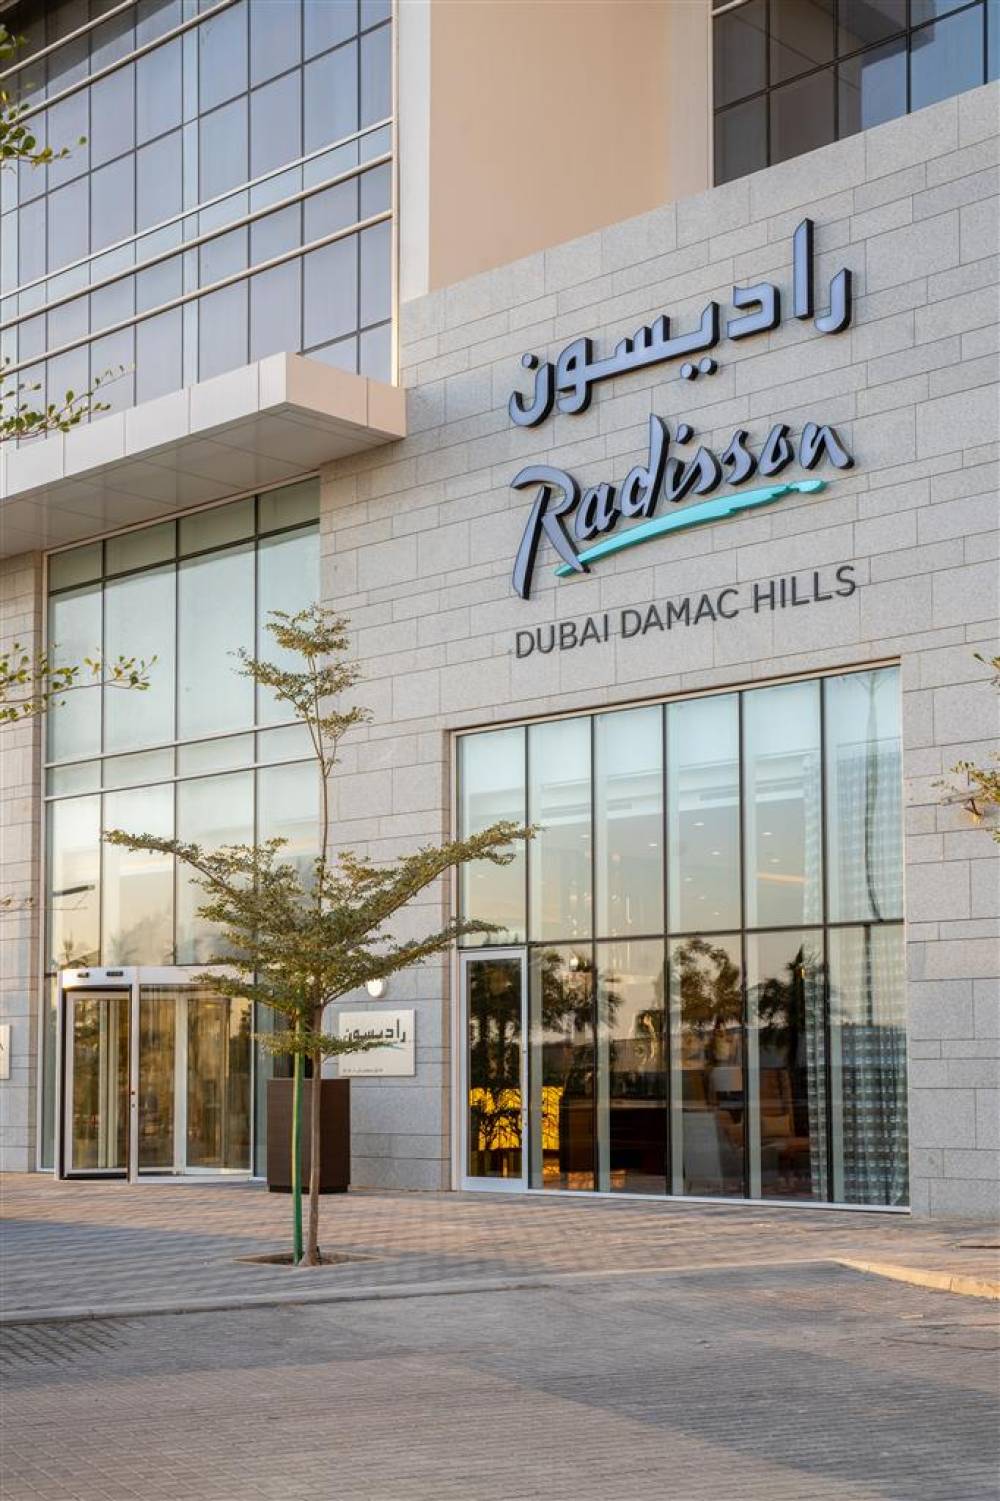 Radisson Hotel, Dubai Damac Hills